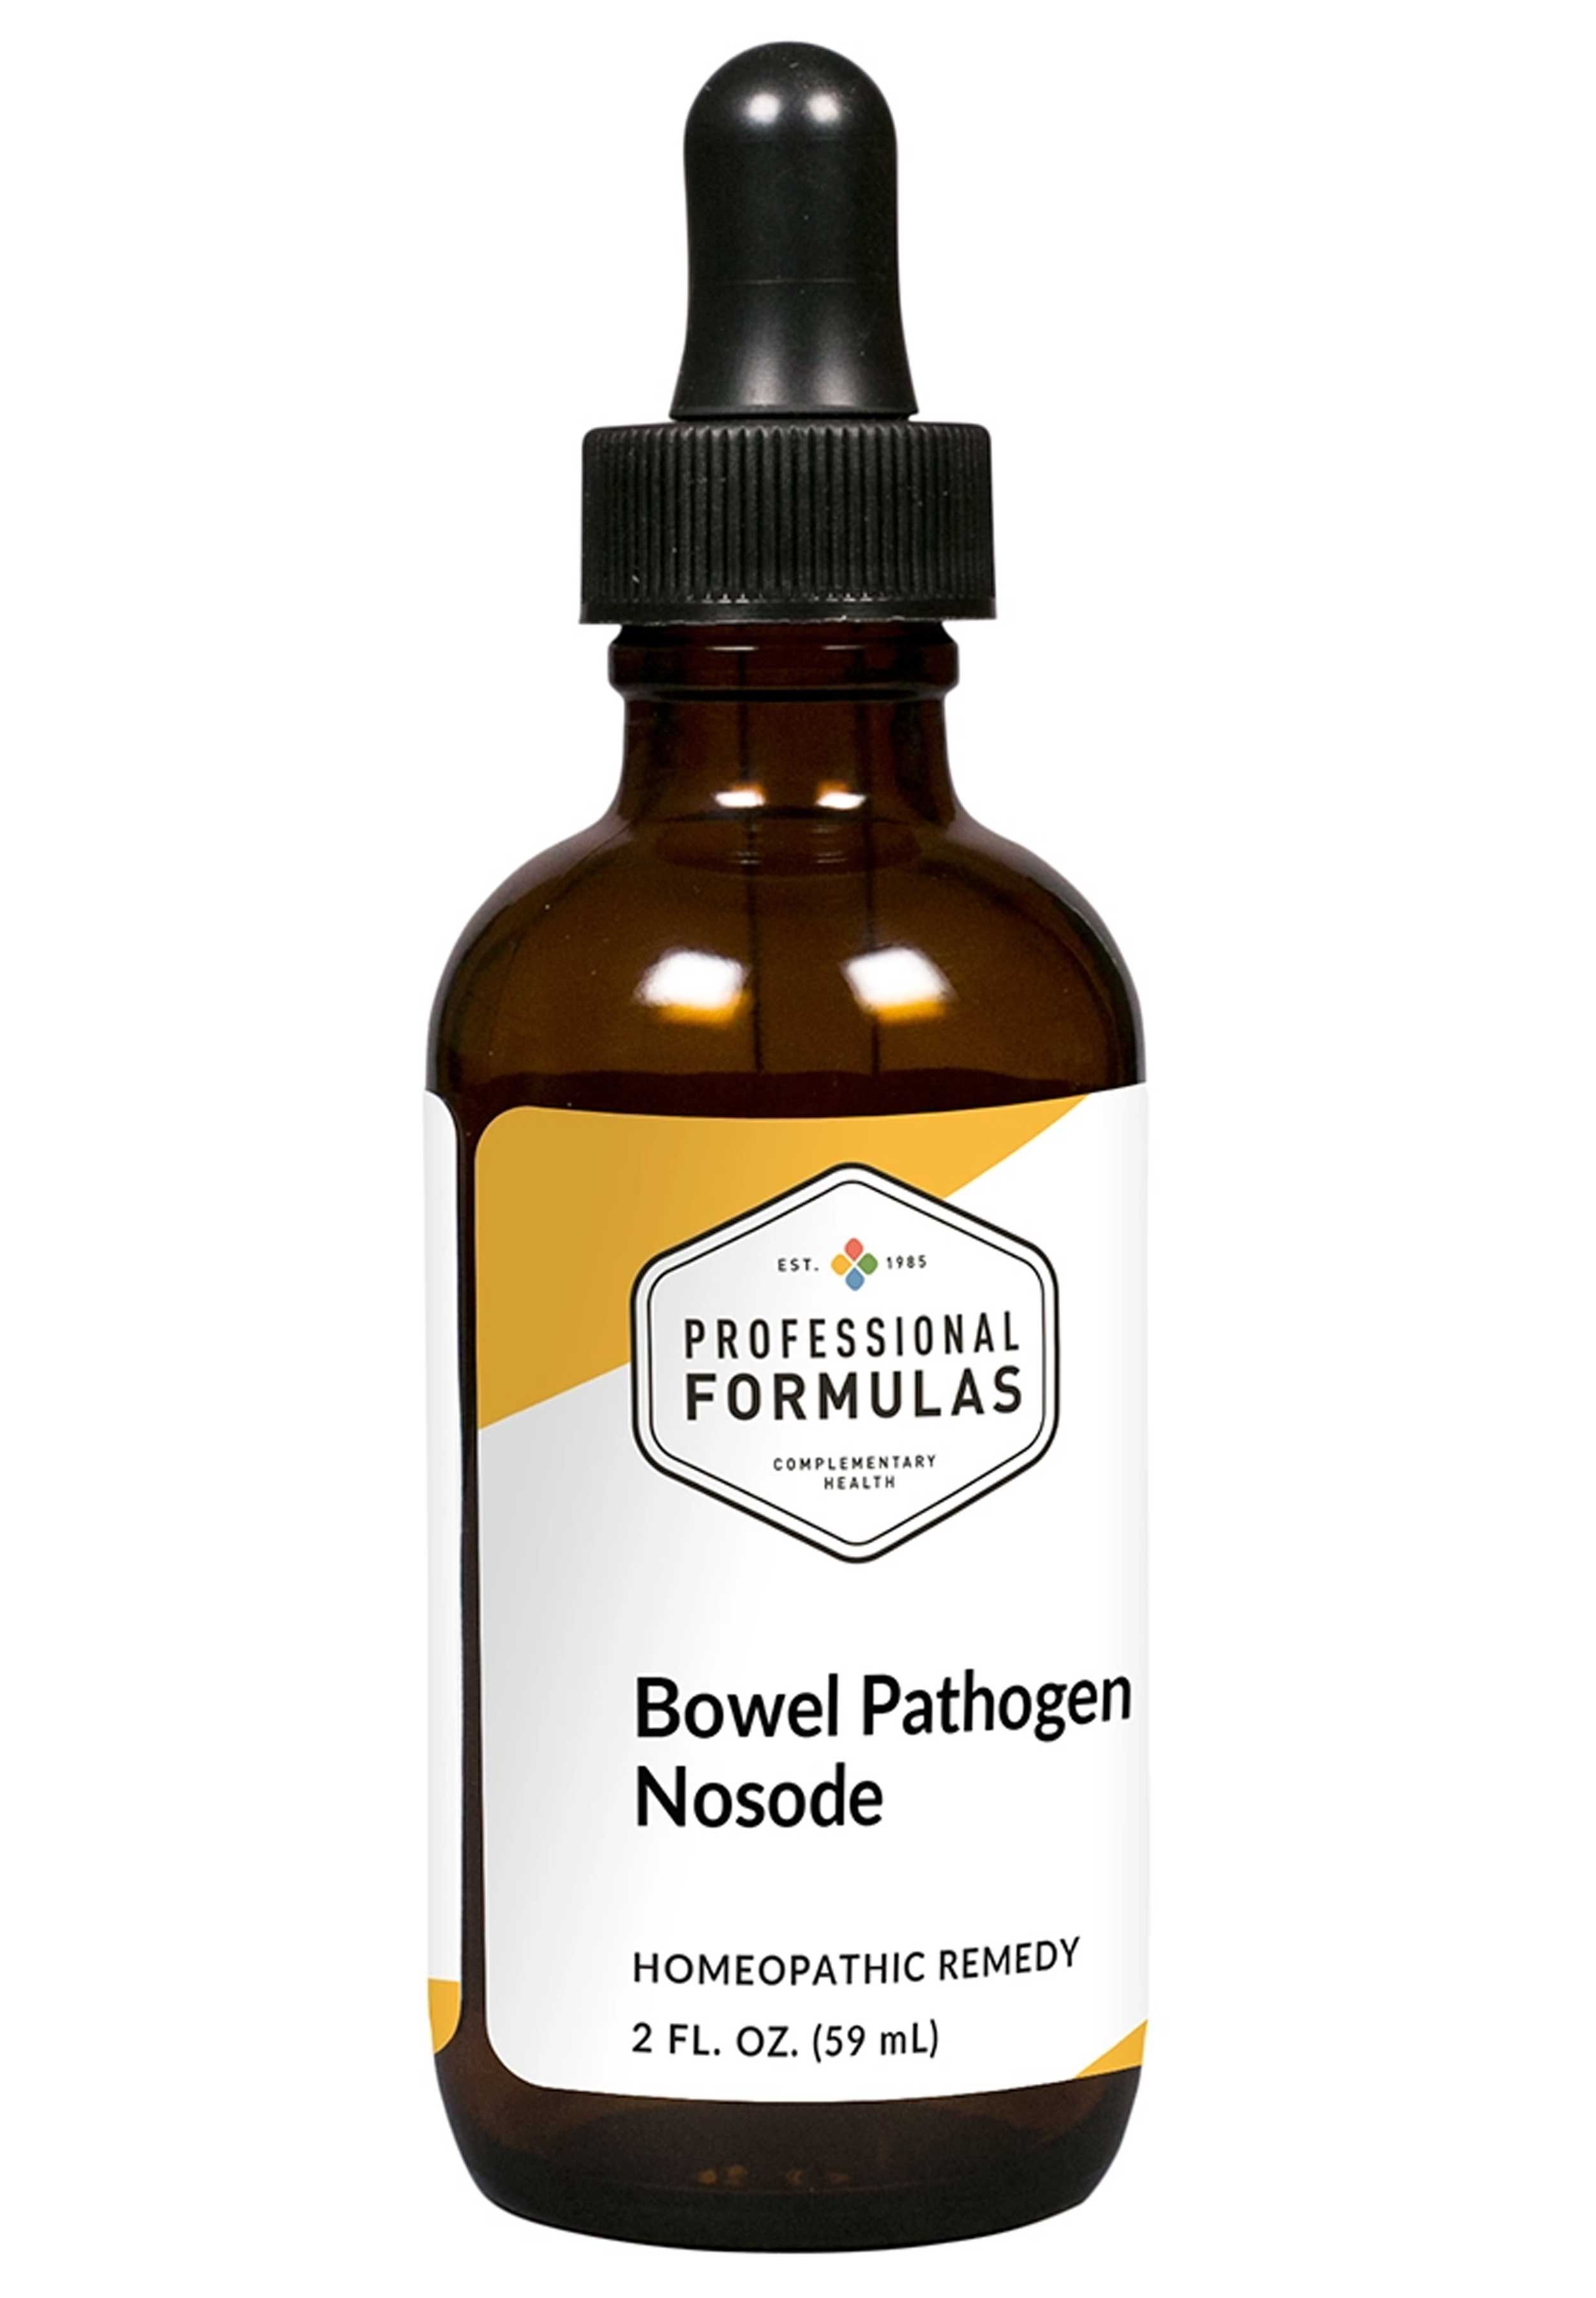 Professional Formulas Bowel Pathogen Nosode